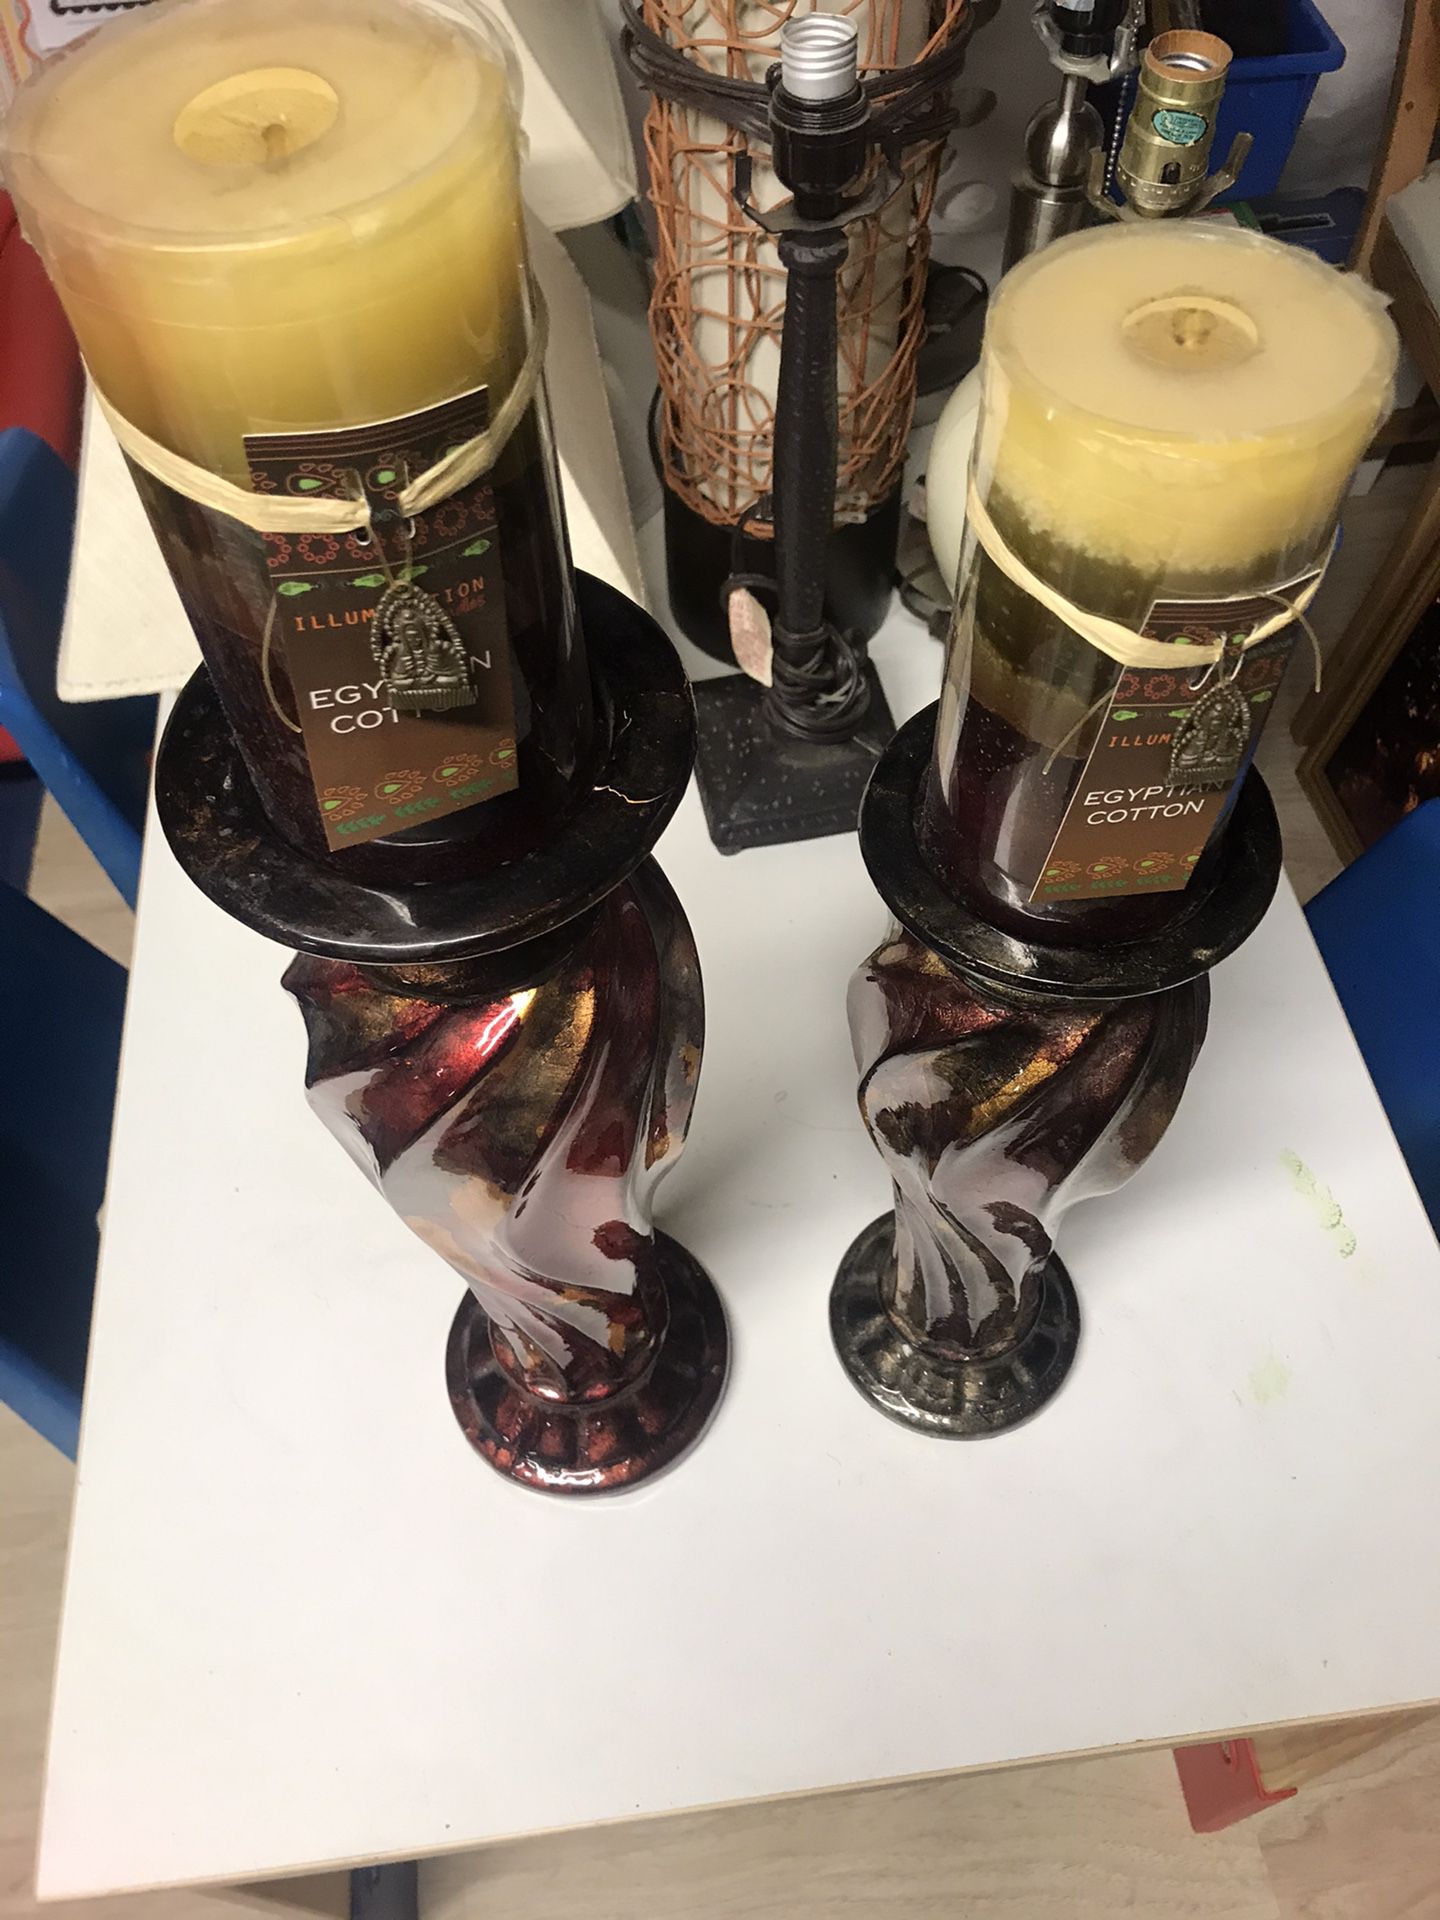 2 Candles, Candle Sticks & Vase - $15